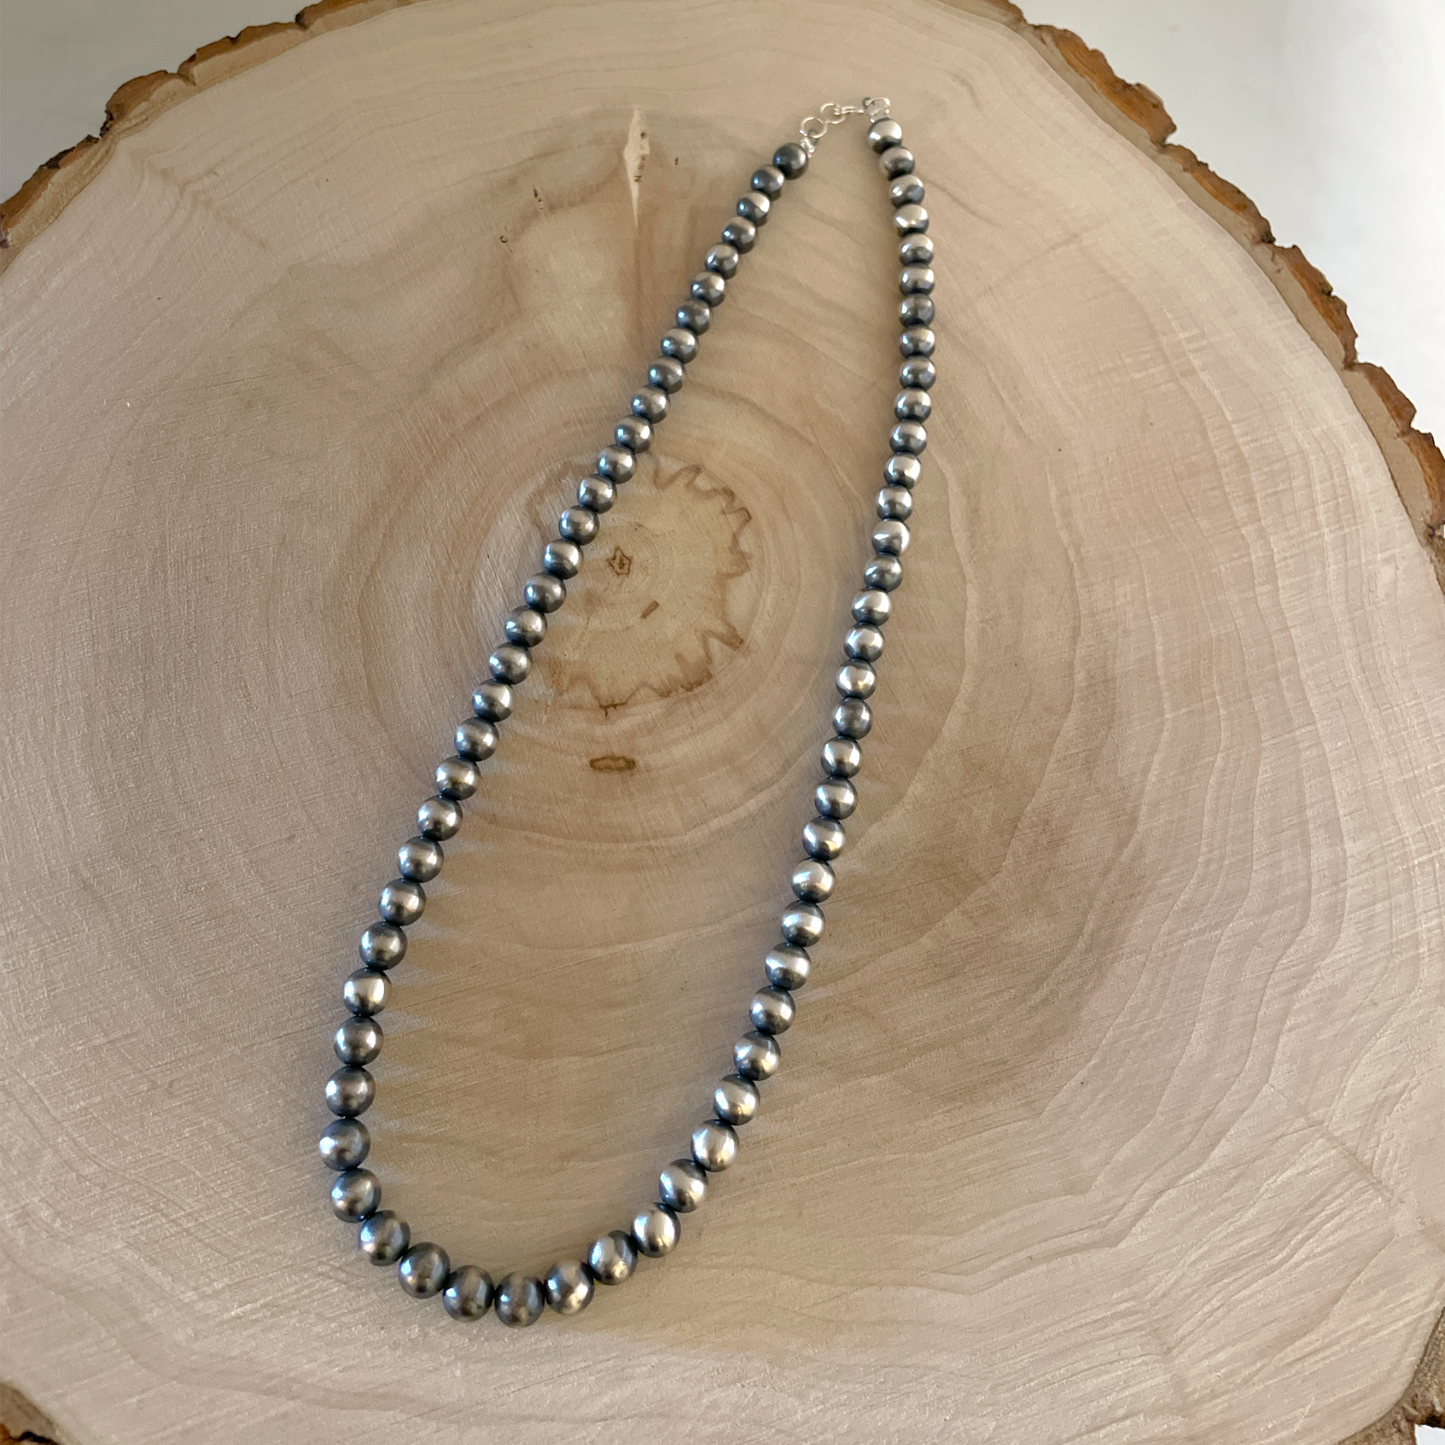 Round Navajo Pearls Necklace 6mm - 16"